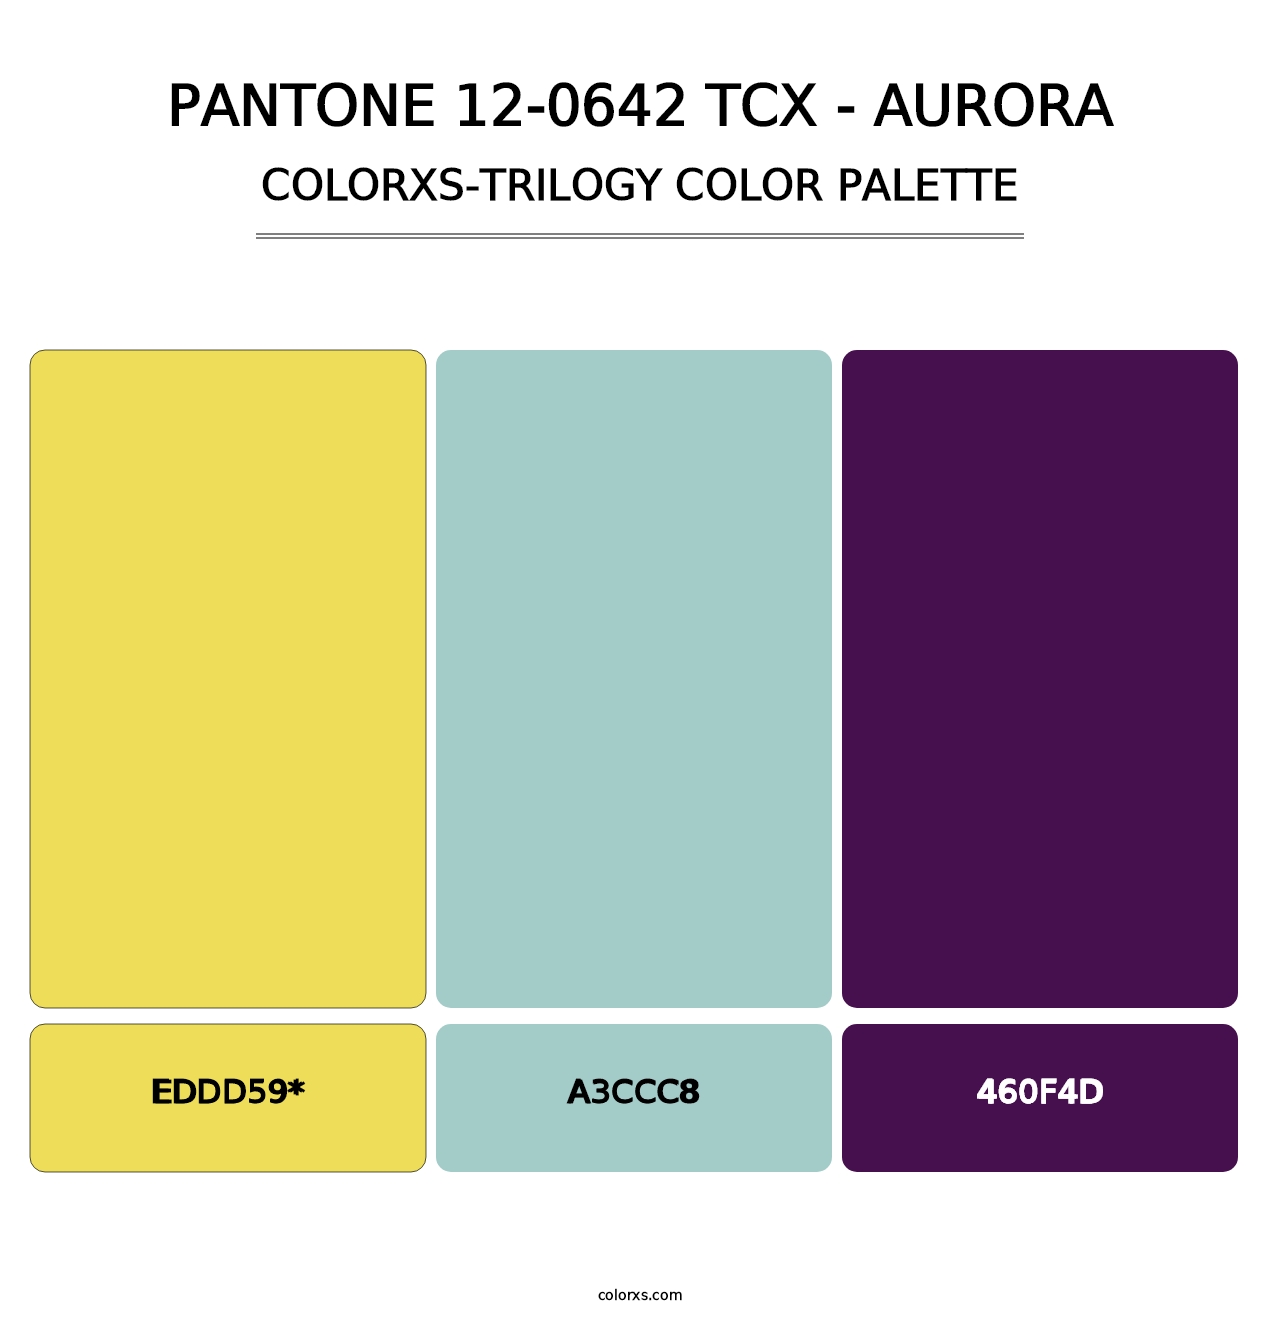 PANTONE 12-0642 TCX - Aurora - Colorxs Trilogy Palette